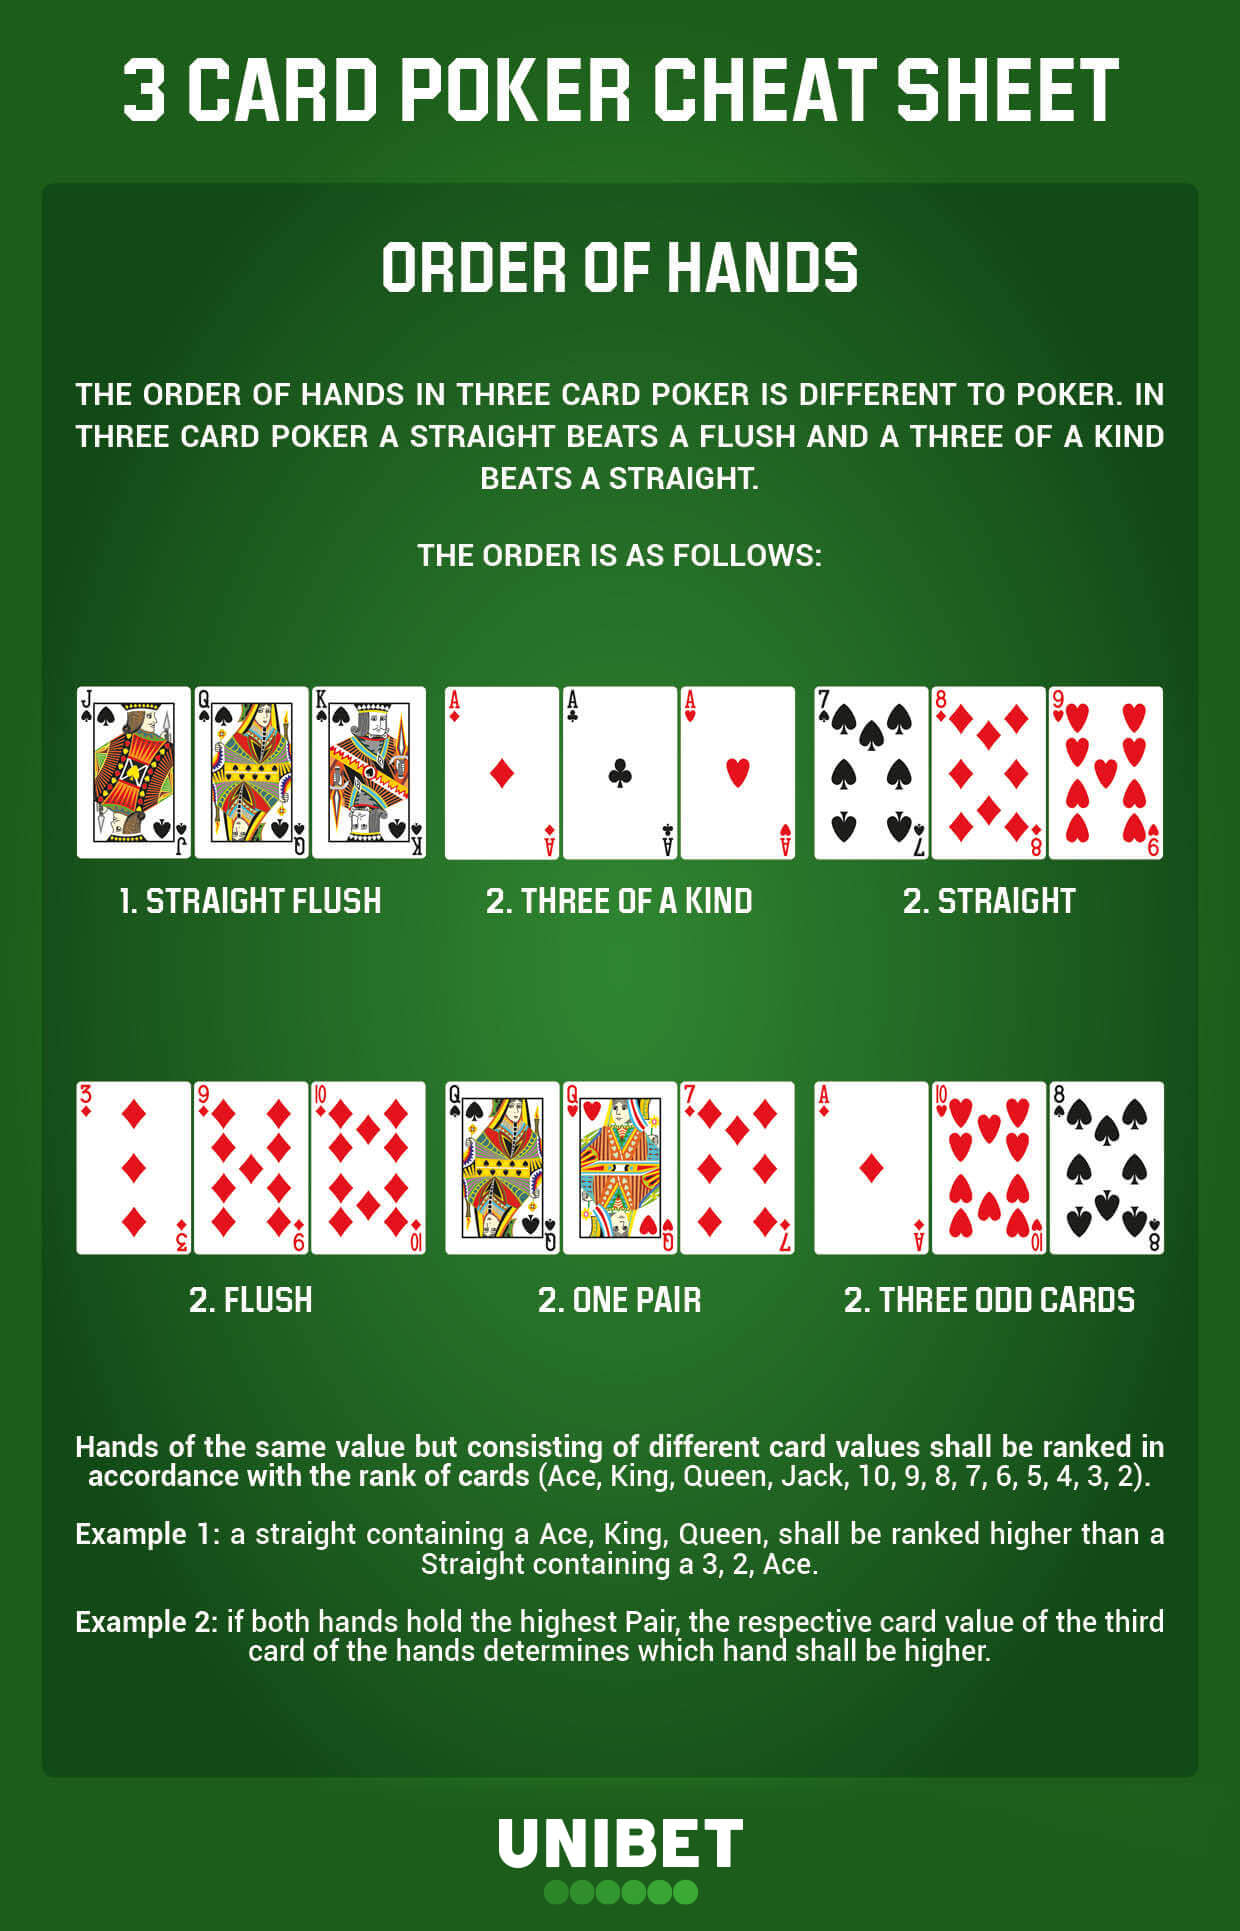 3 card poker betting strategy